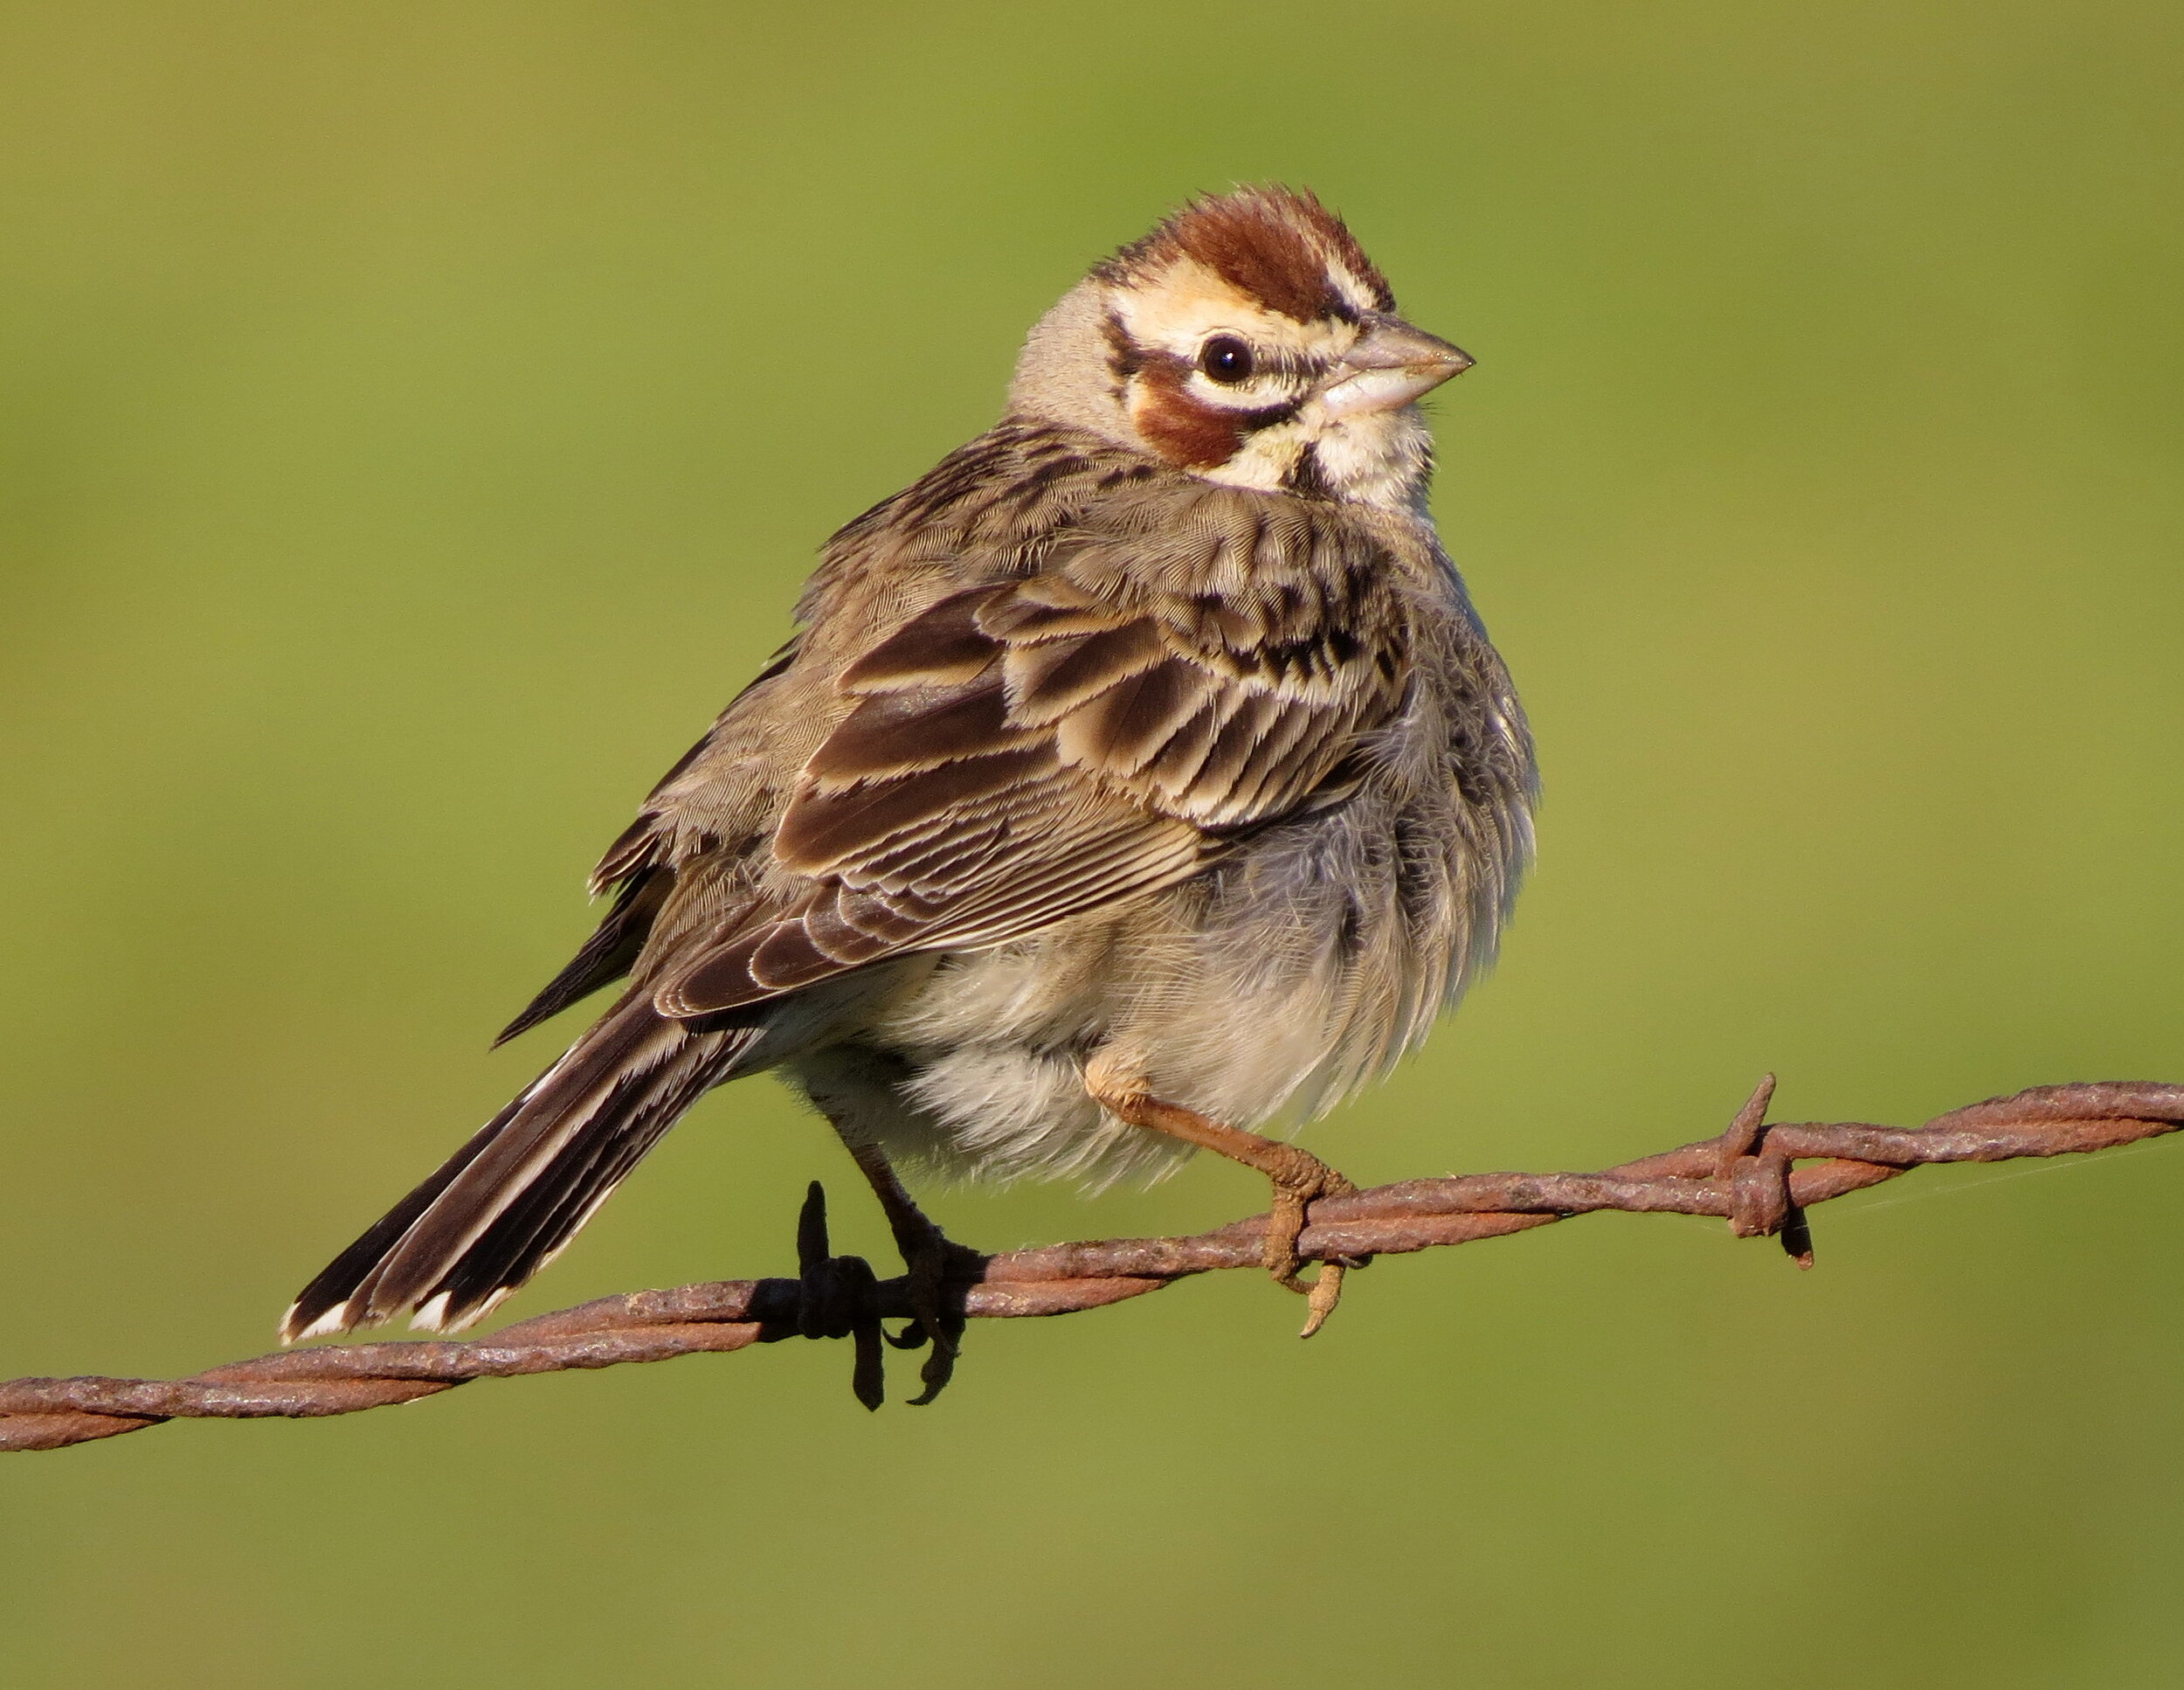  Lark Sparrow  Image by Chris Conard  